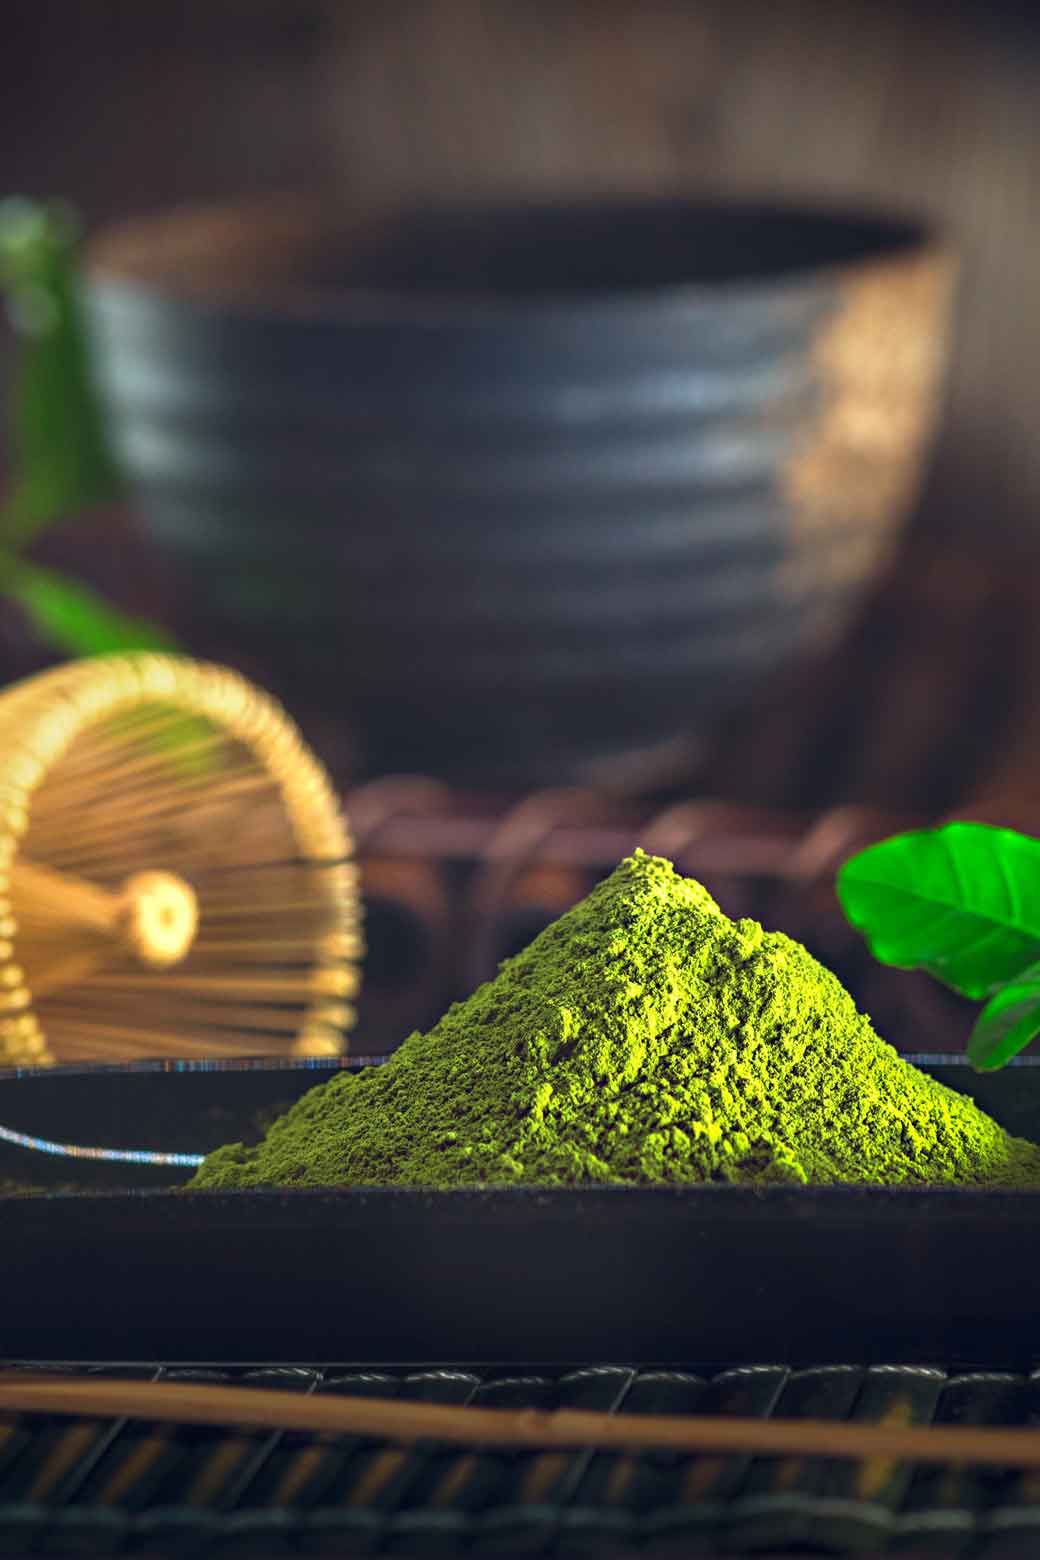 Powdered green tea with Japanese tea utensils